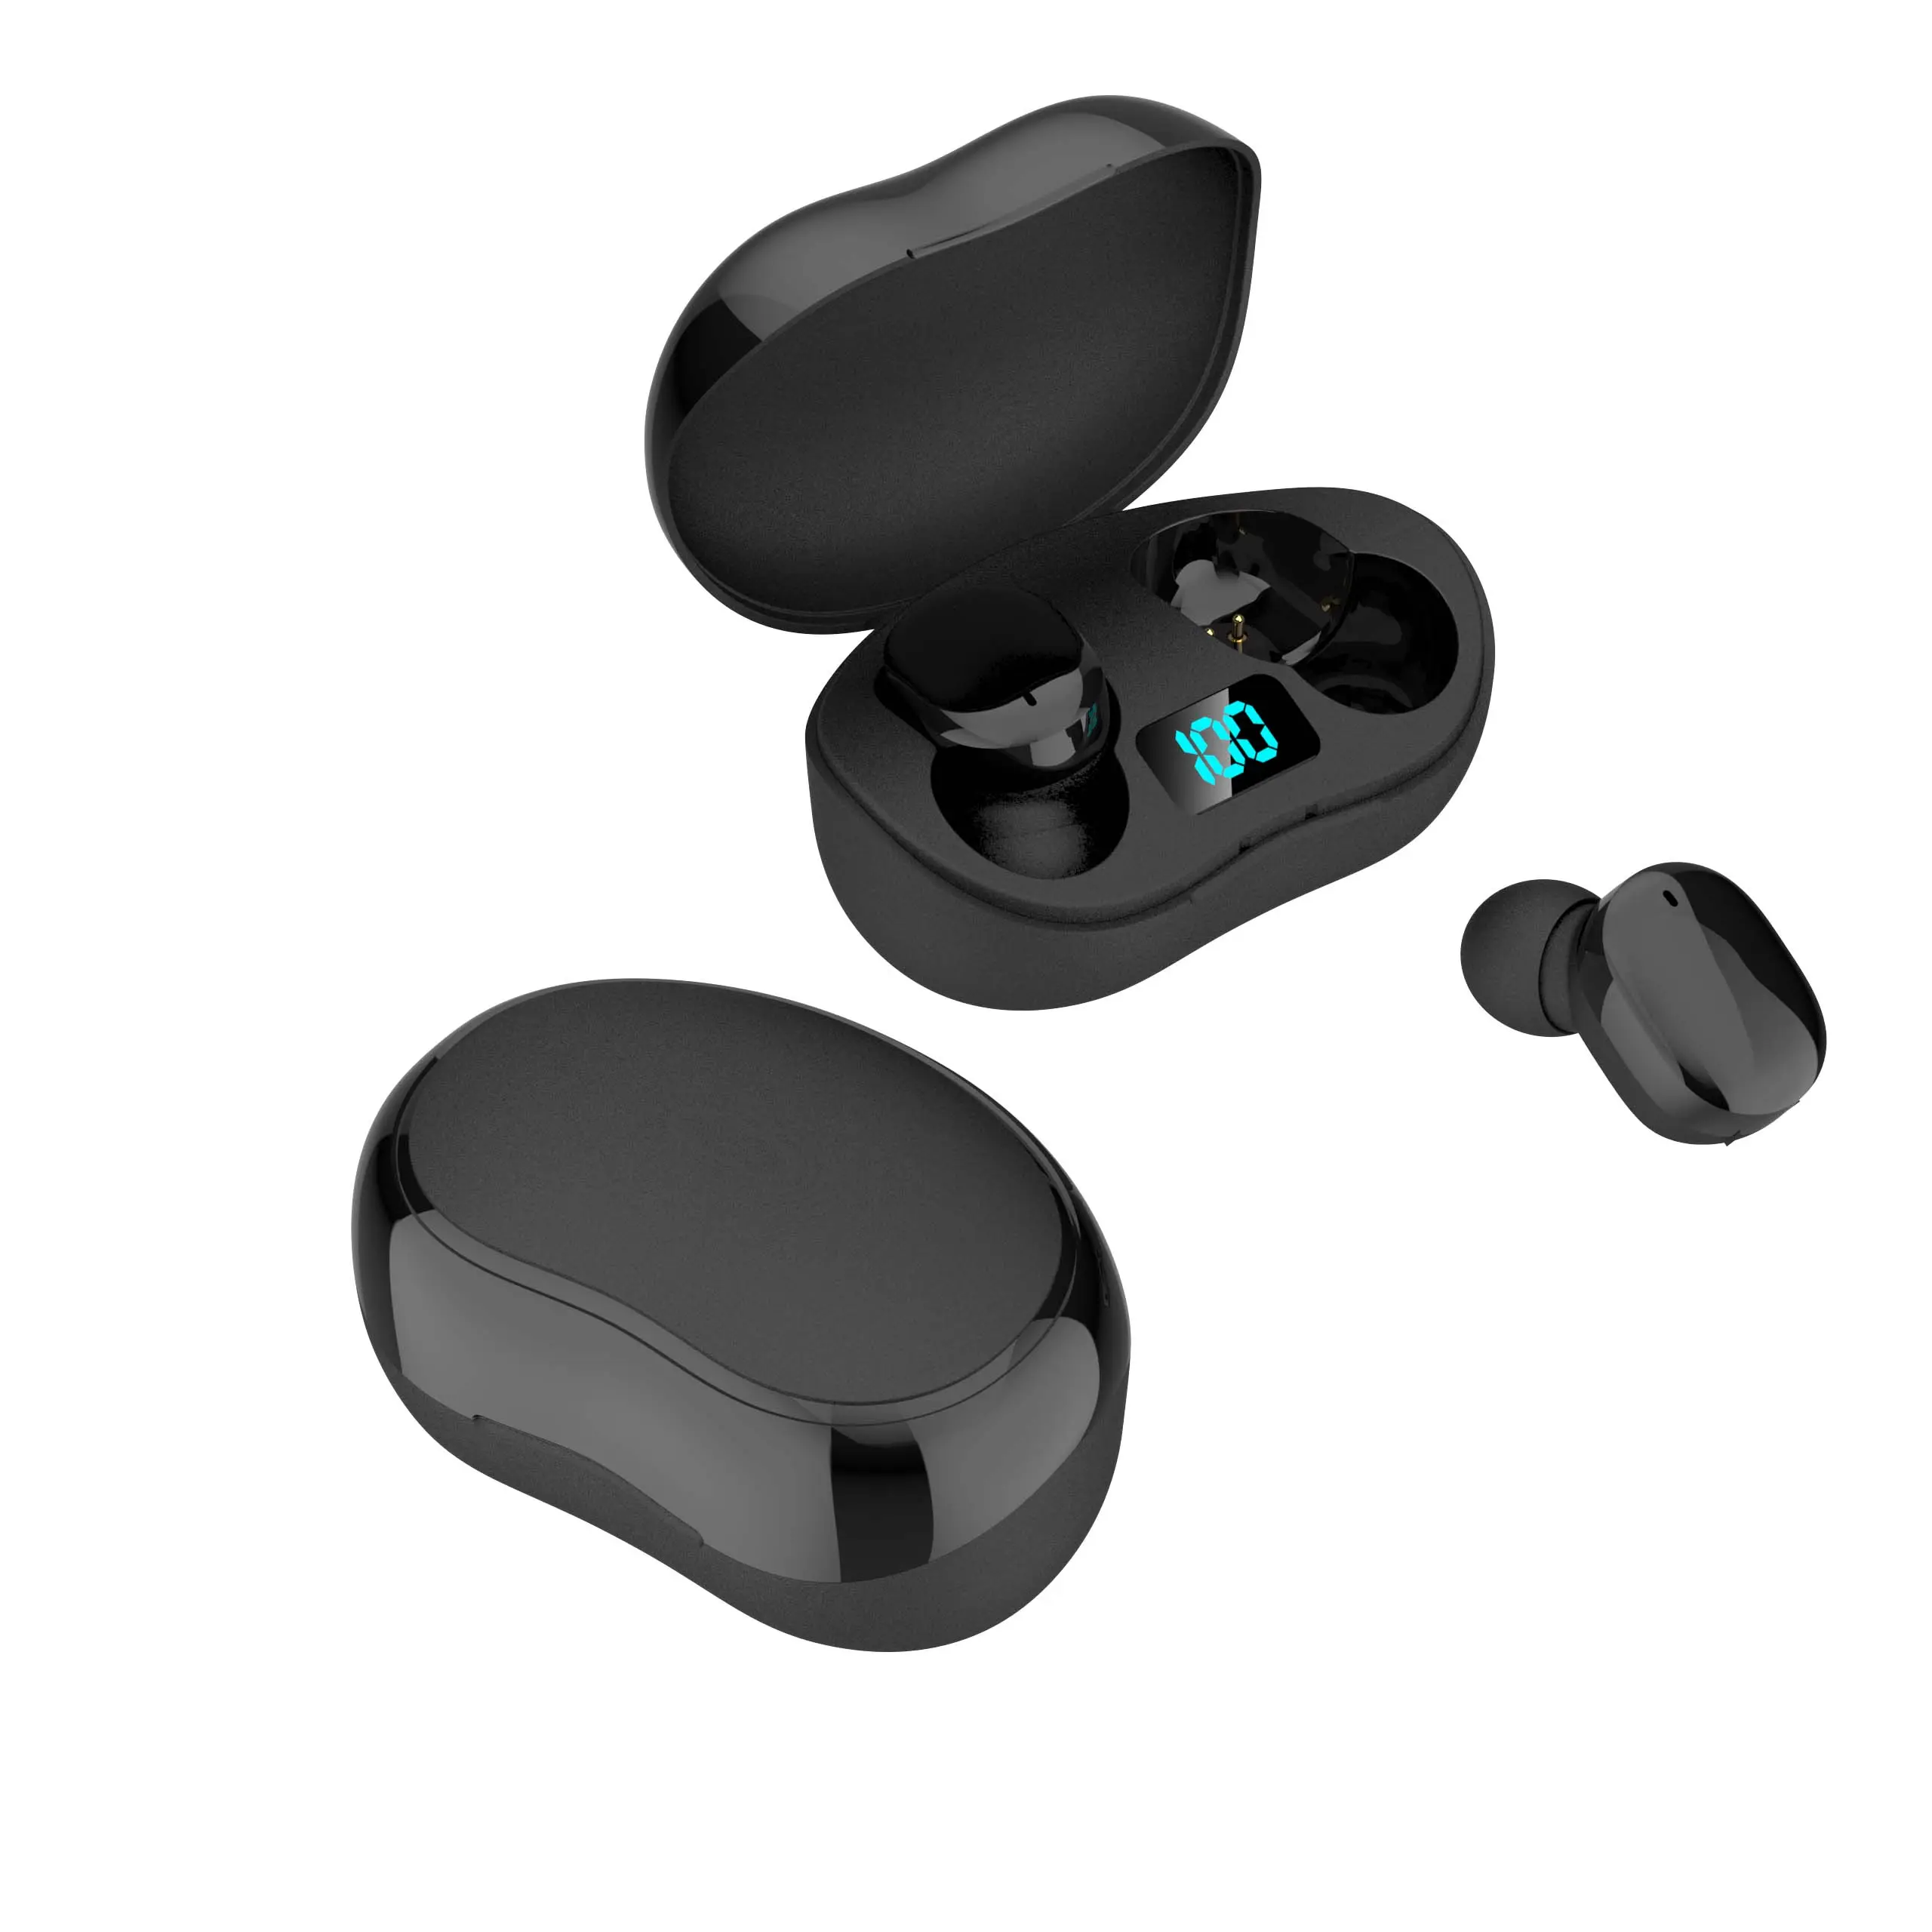 New Arrival E8S Tws Earphones Wireless Earbuds Headsets Sports Gaming Waterproof Tws e8s Led Display Earphone